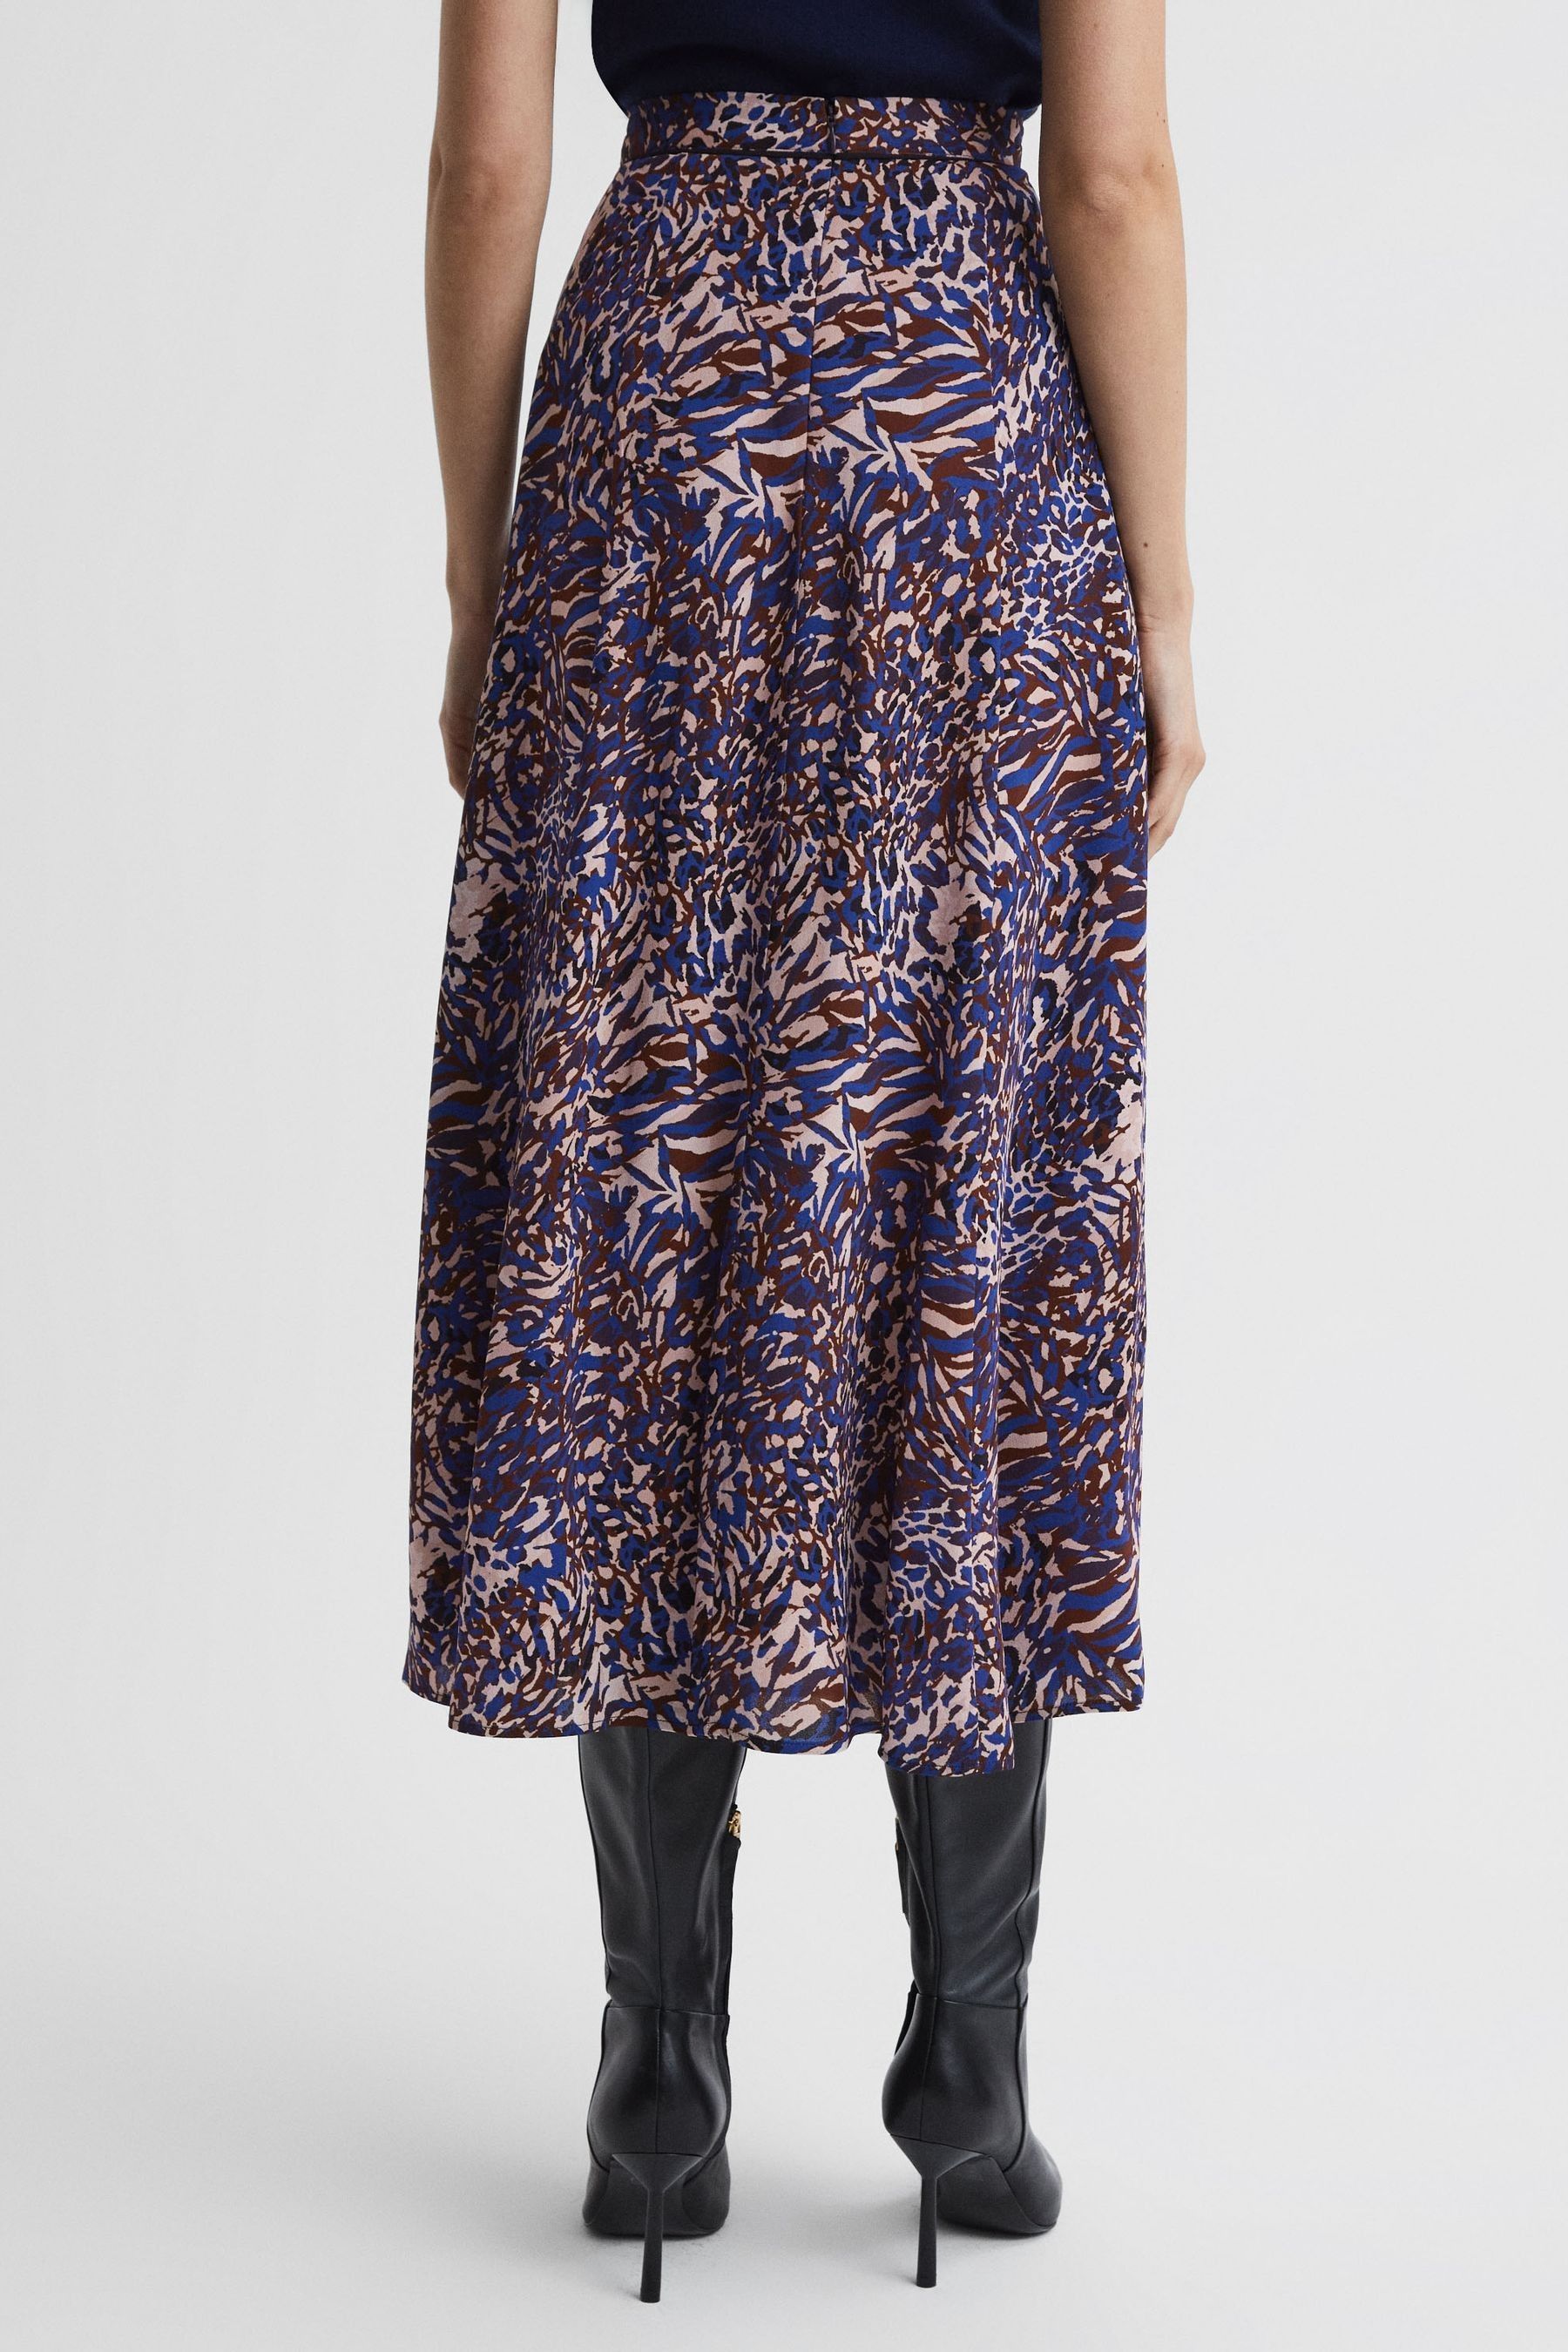 Buy Reiss Katia Printed Midi Skirt from the Next UK online shop